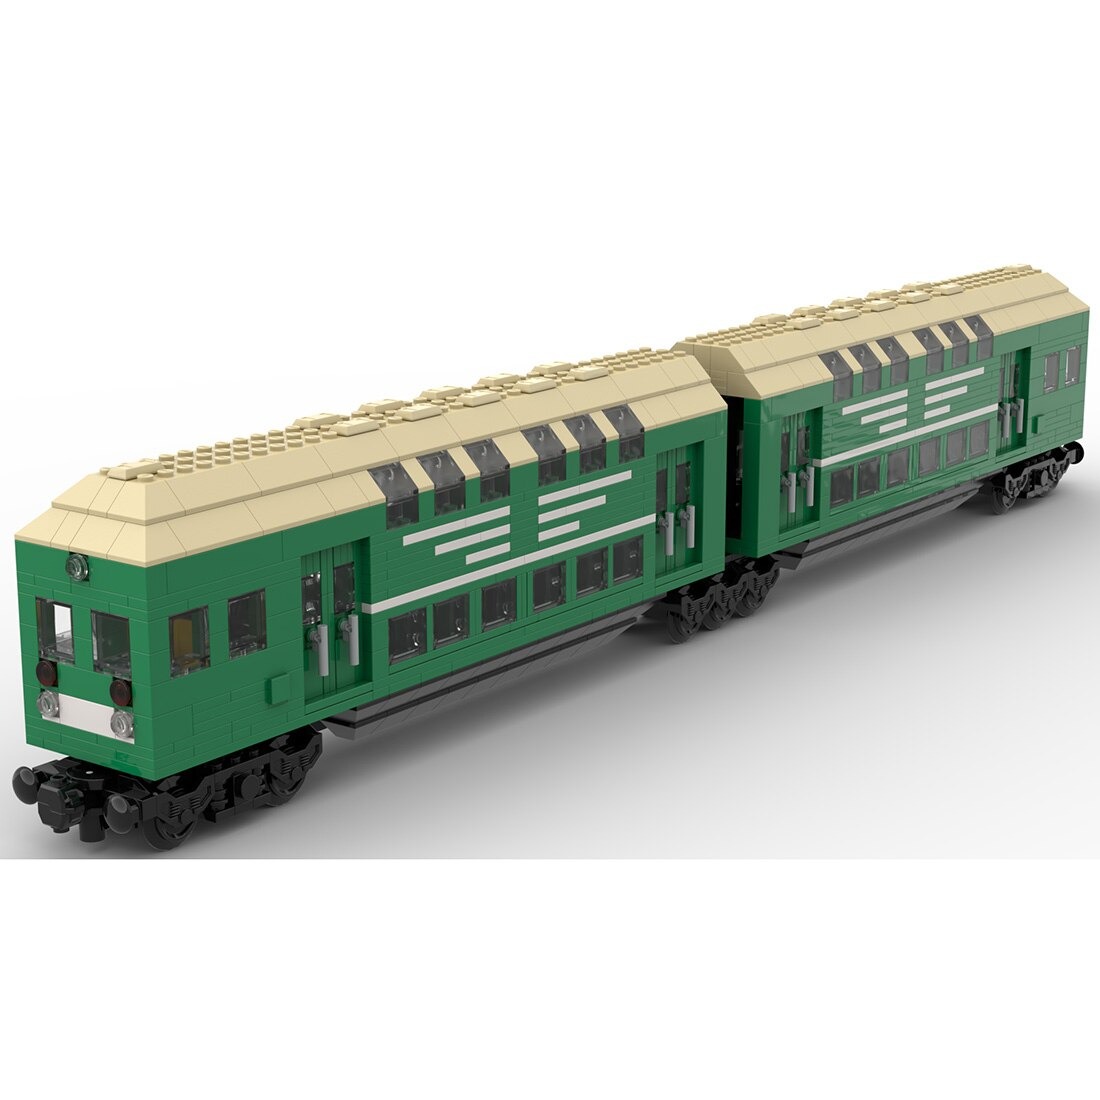 authorized moc 109281 7 axle train carri main 5